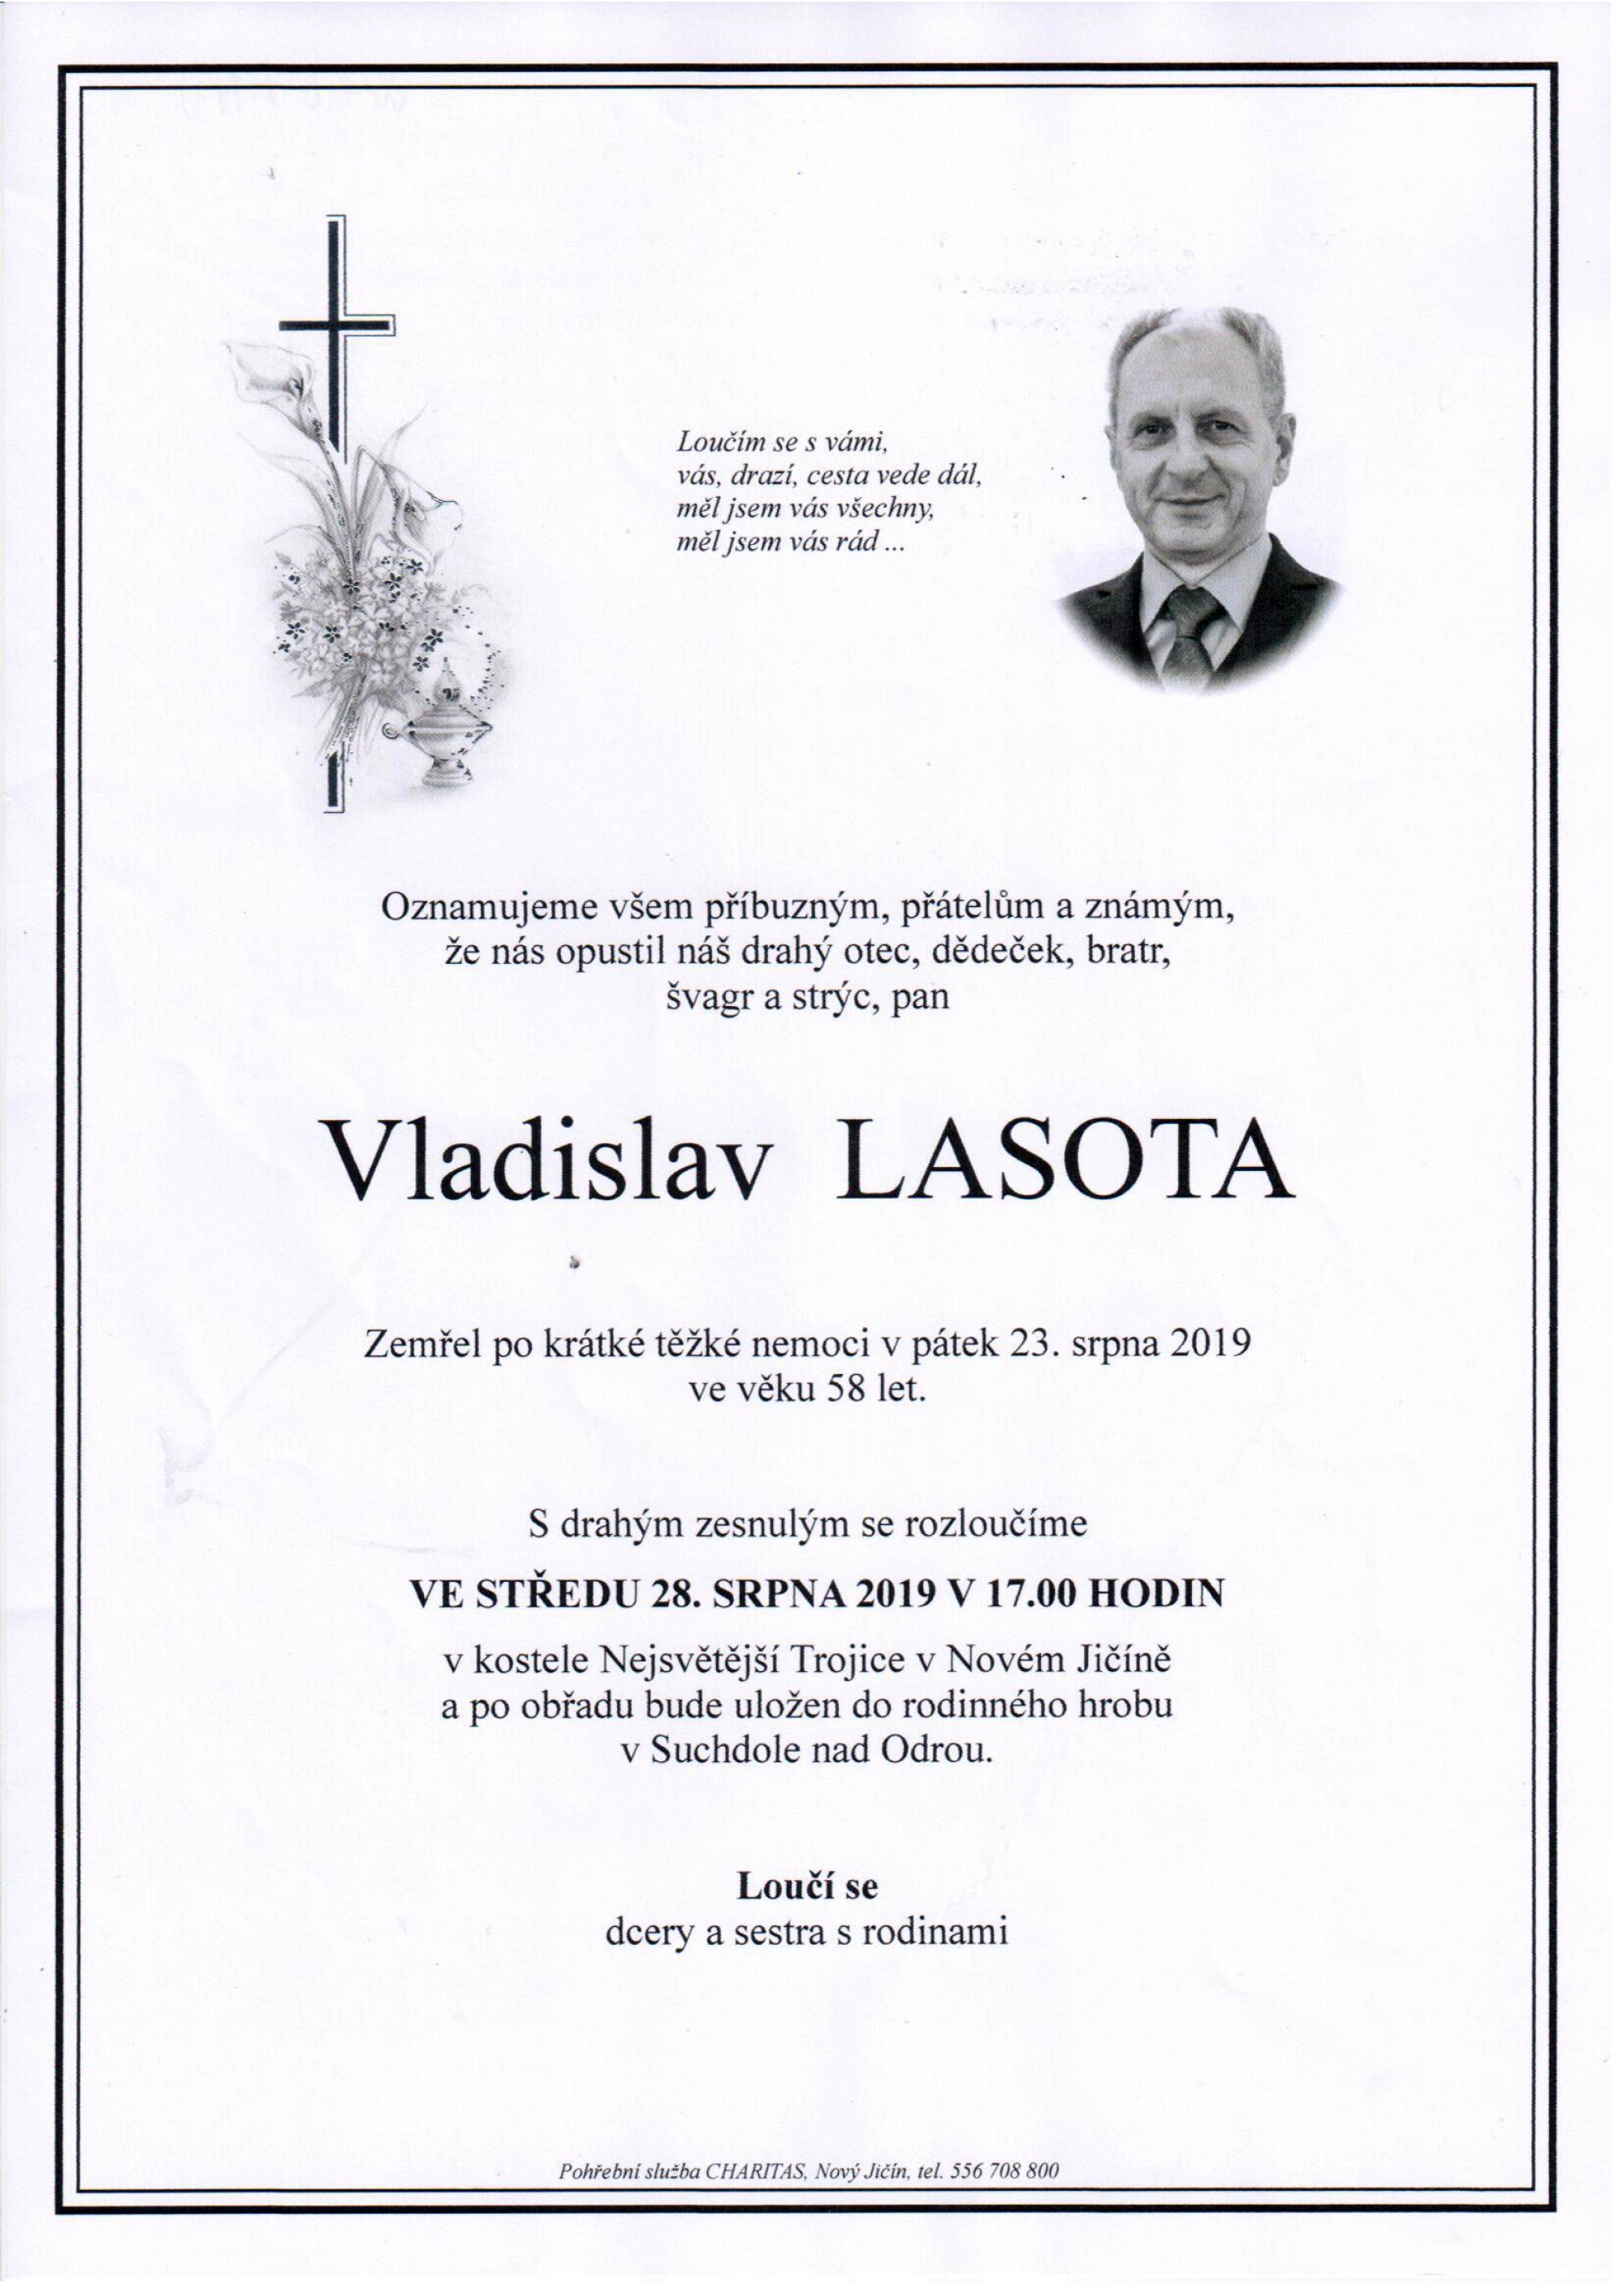 Vladislav Lasota